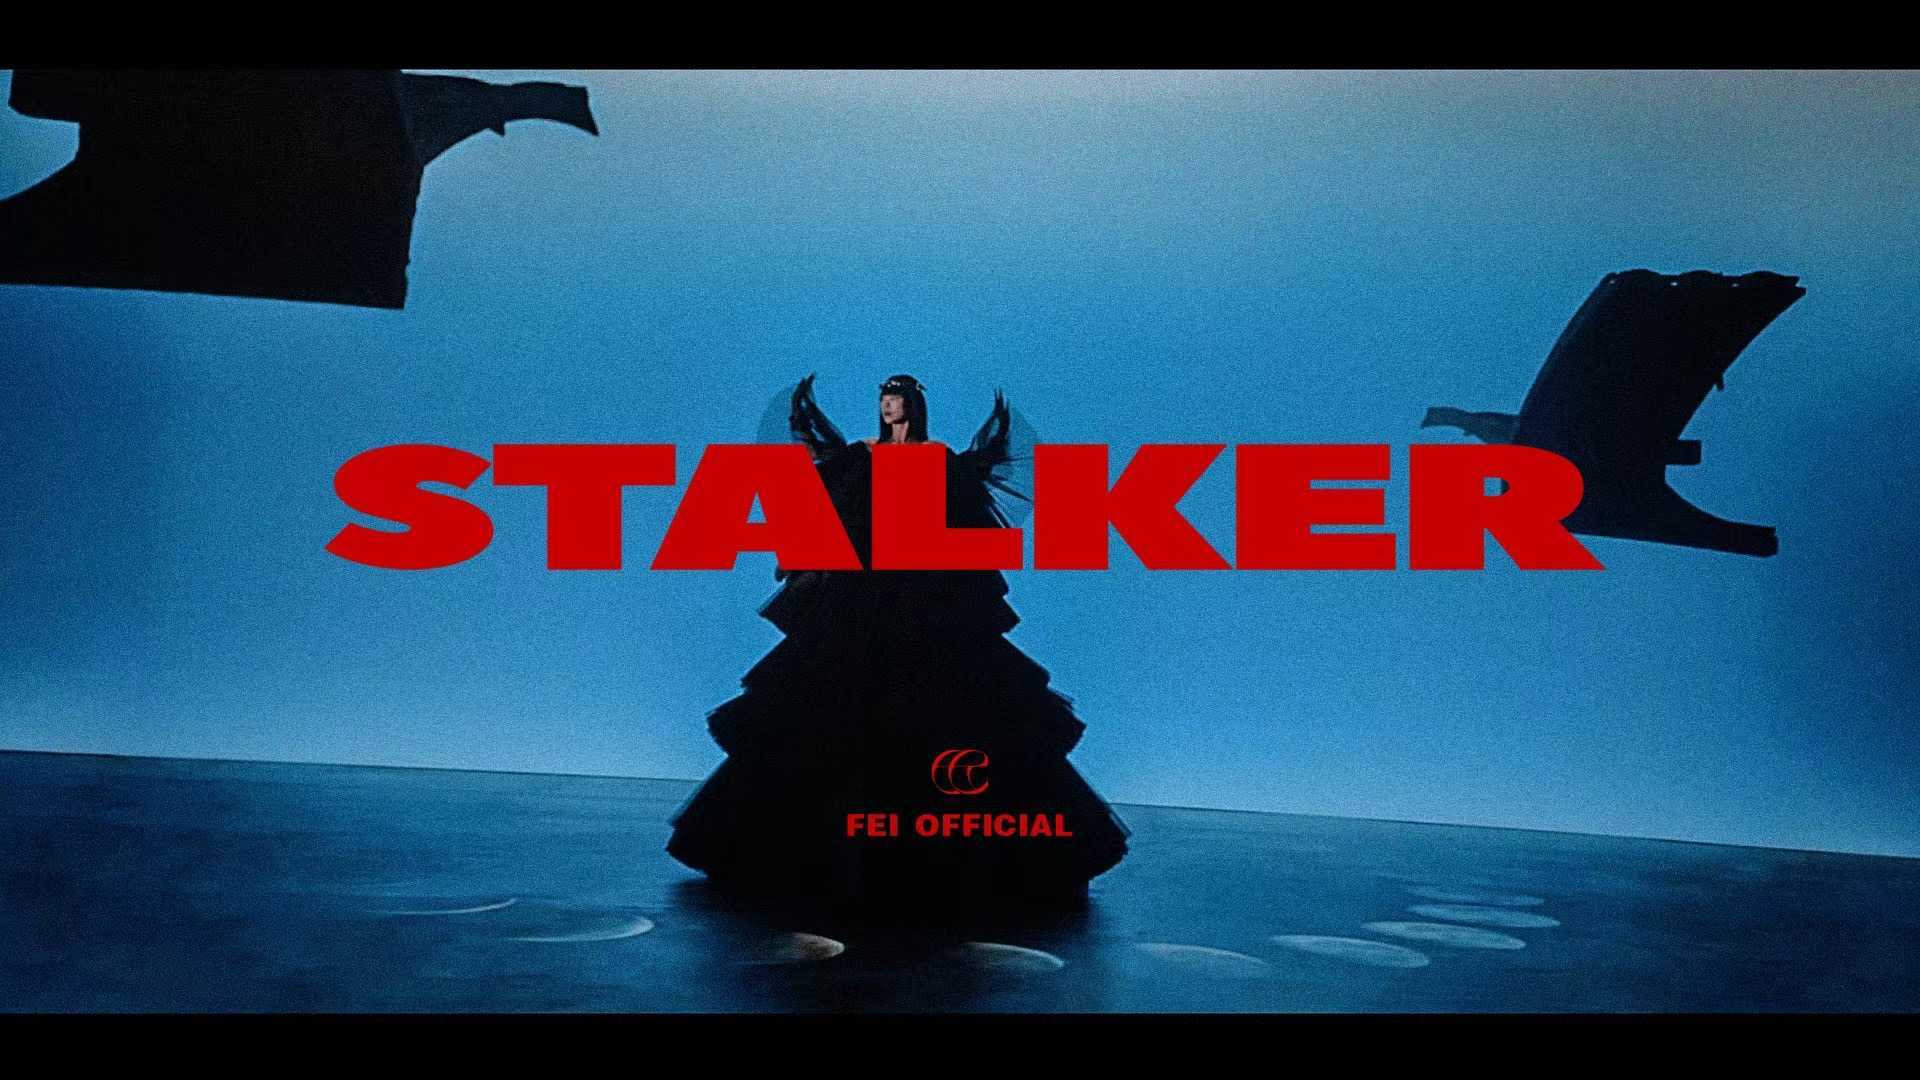 STALKER-FEIFEI WANG MV